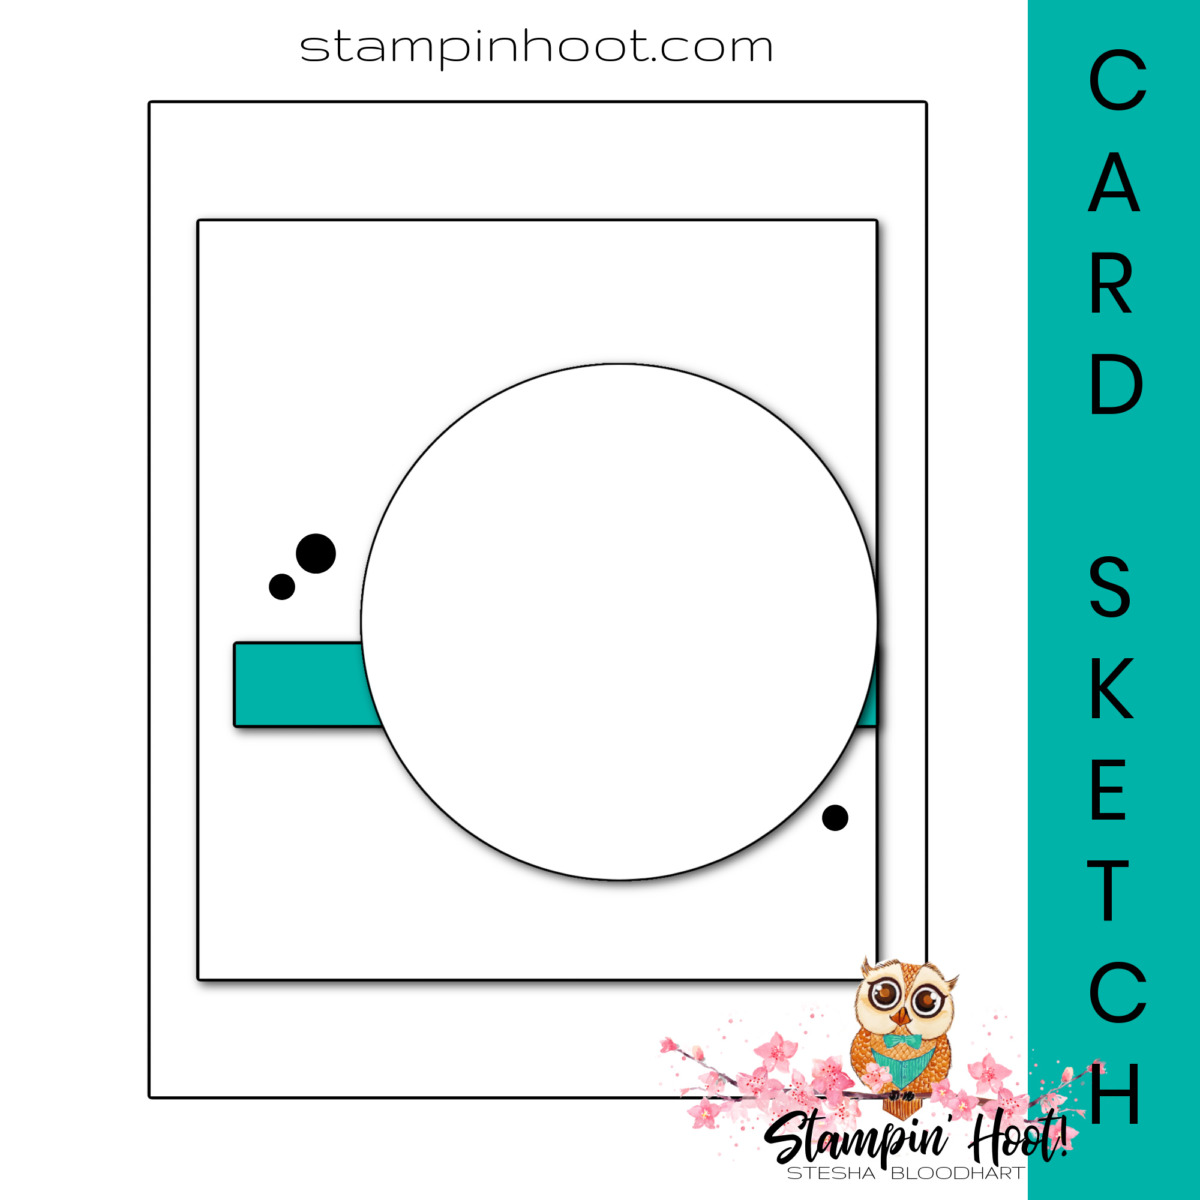 Stampin' Hoot Card Sketch #1